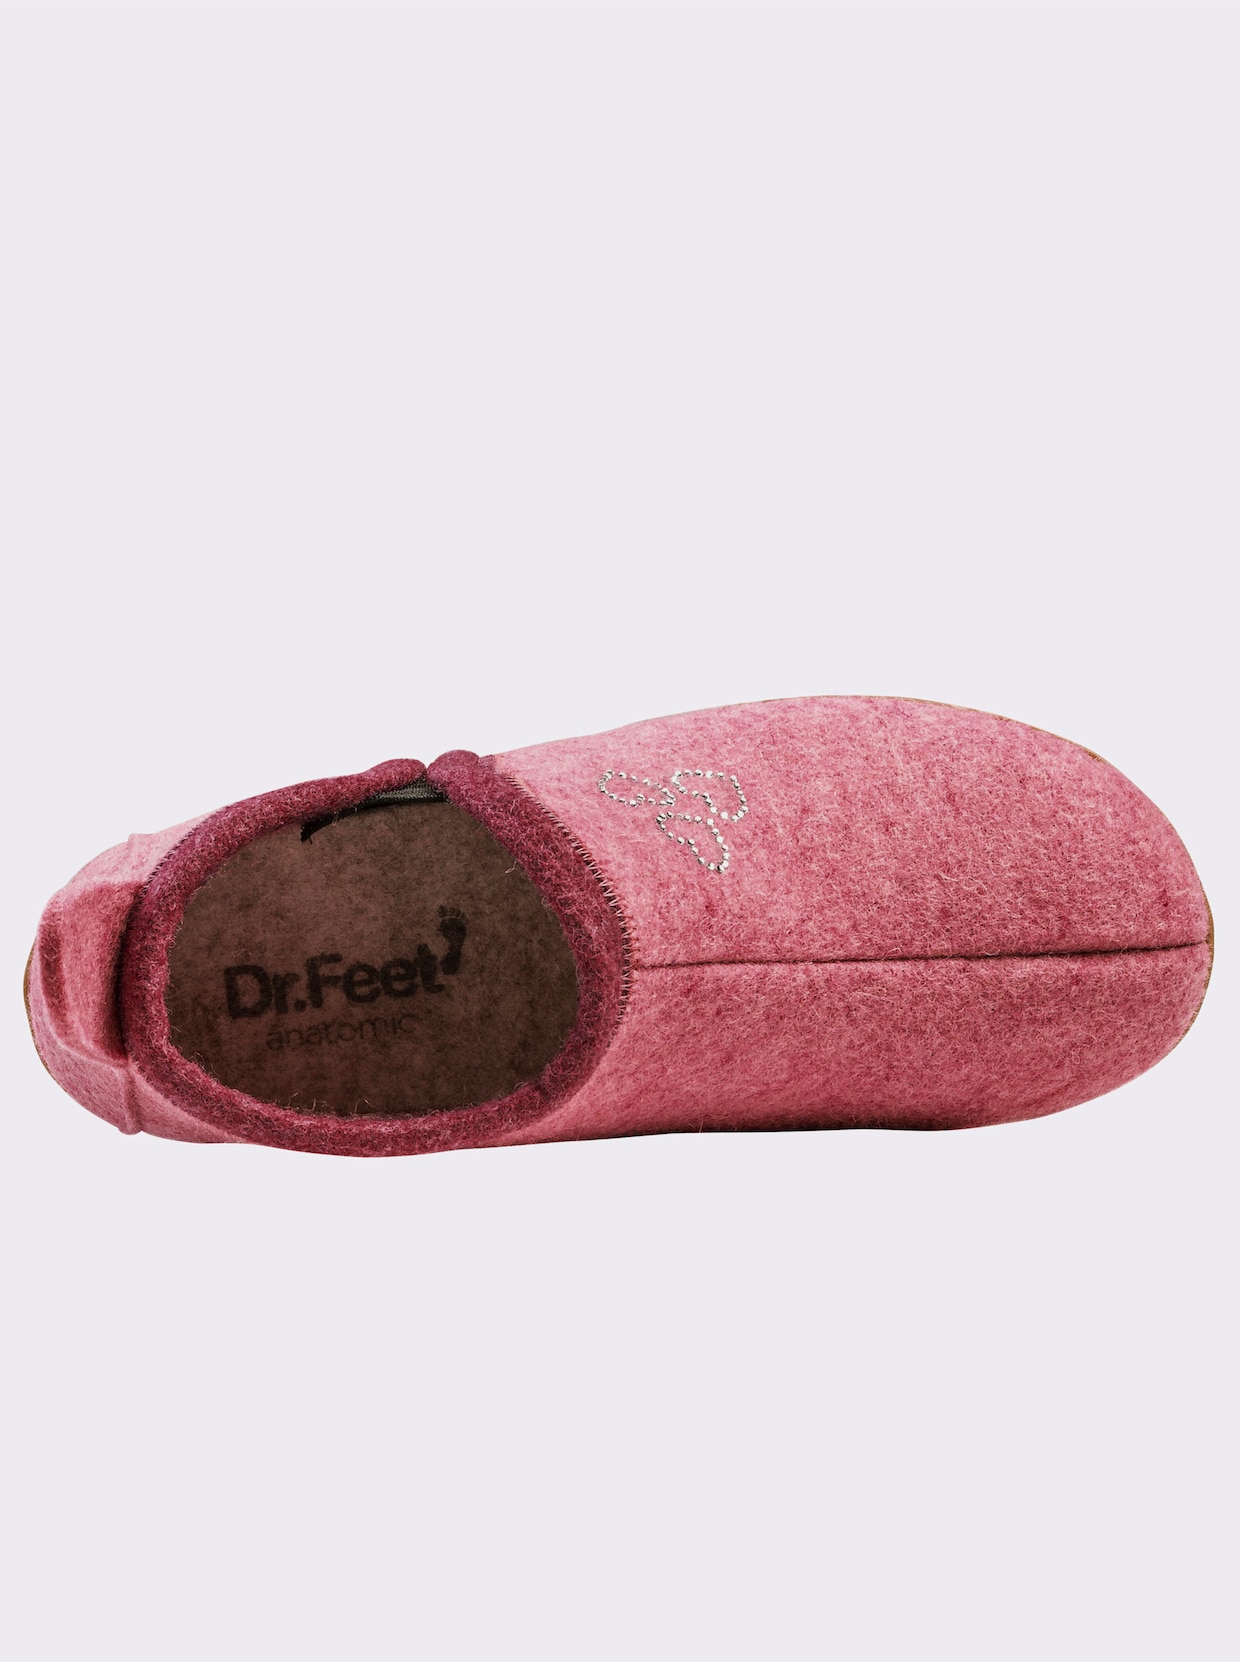 Dr. Feet huisschoenen - roze